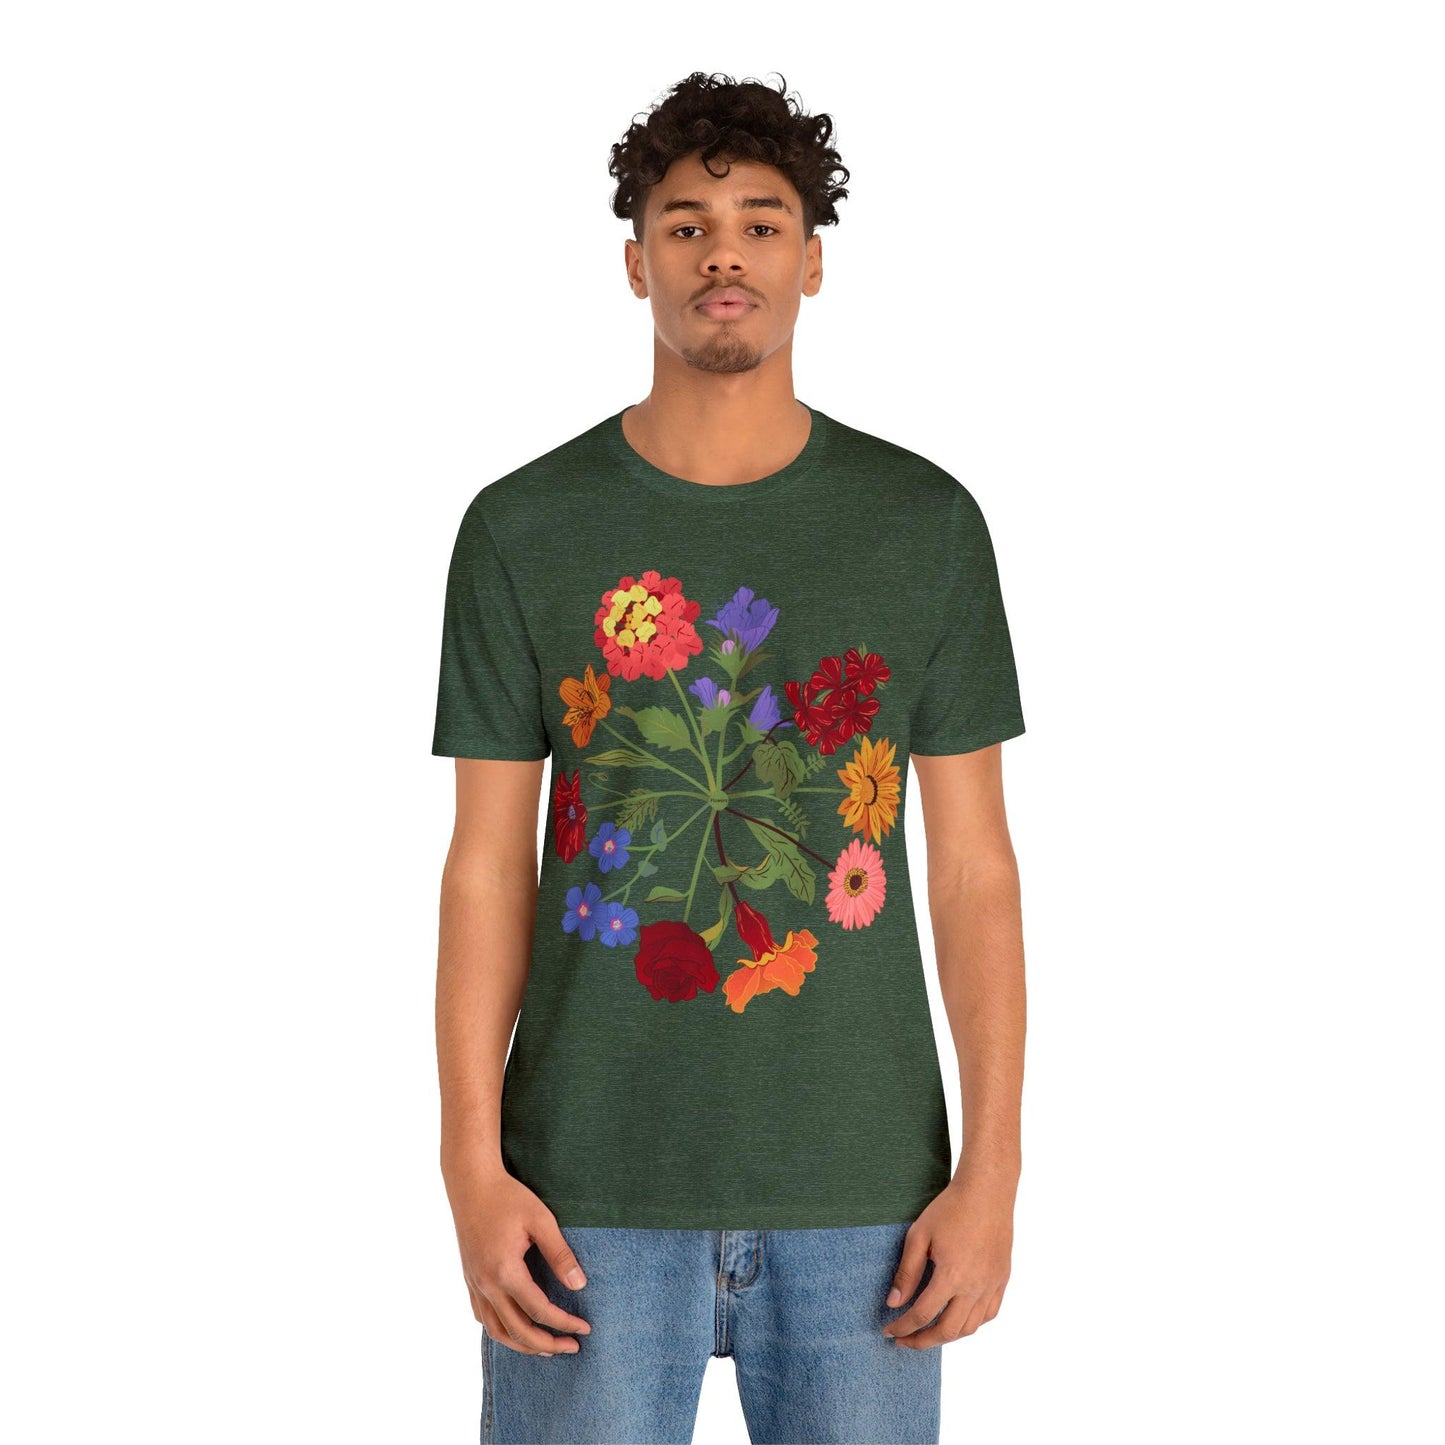 Wildflower Tshirt, Flower Shirt, Types of Flowers Shirt, Floral Tshirt, Gift for Women, Ladies Shirts Best Friend Gift, Plant Mom Nature Tee